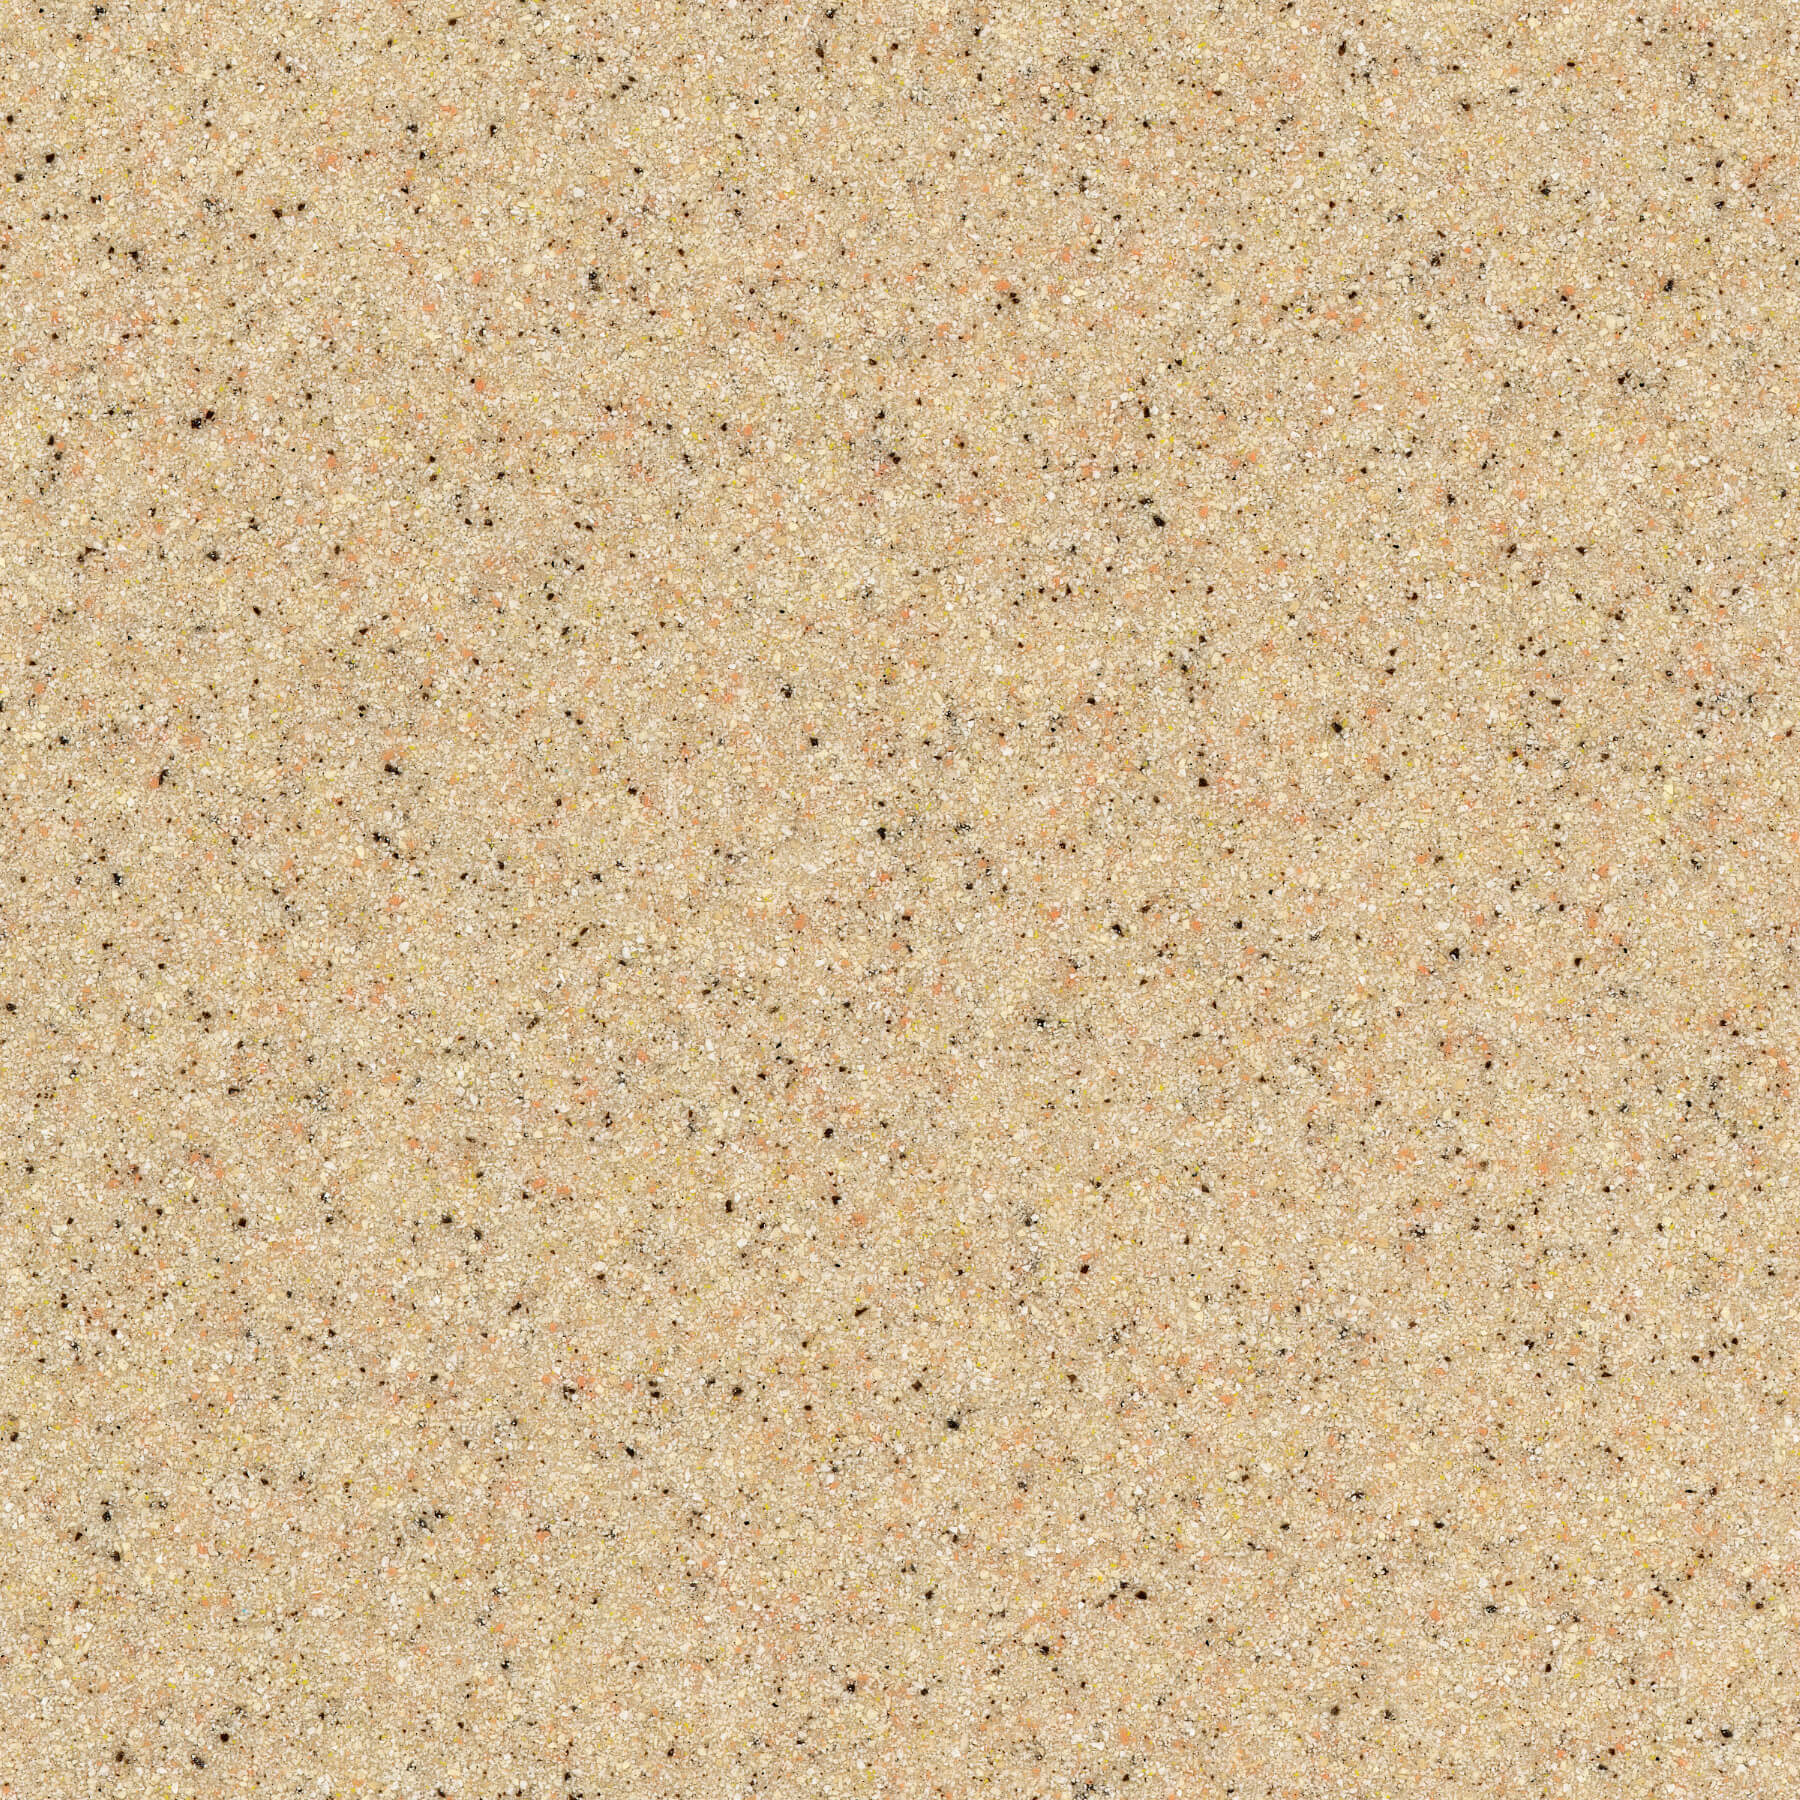 Rynone CM Granite series sand countertop pattern